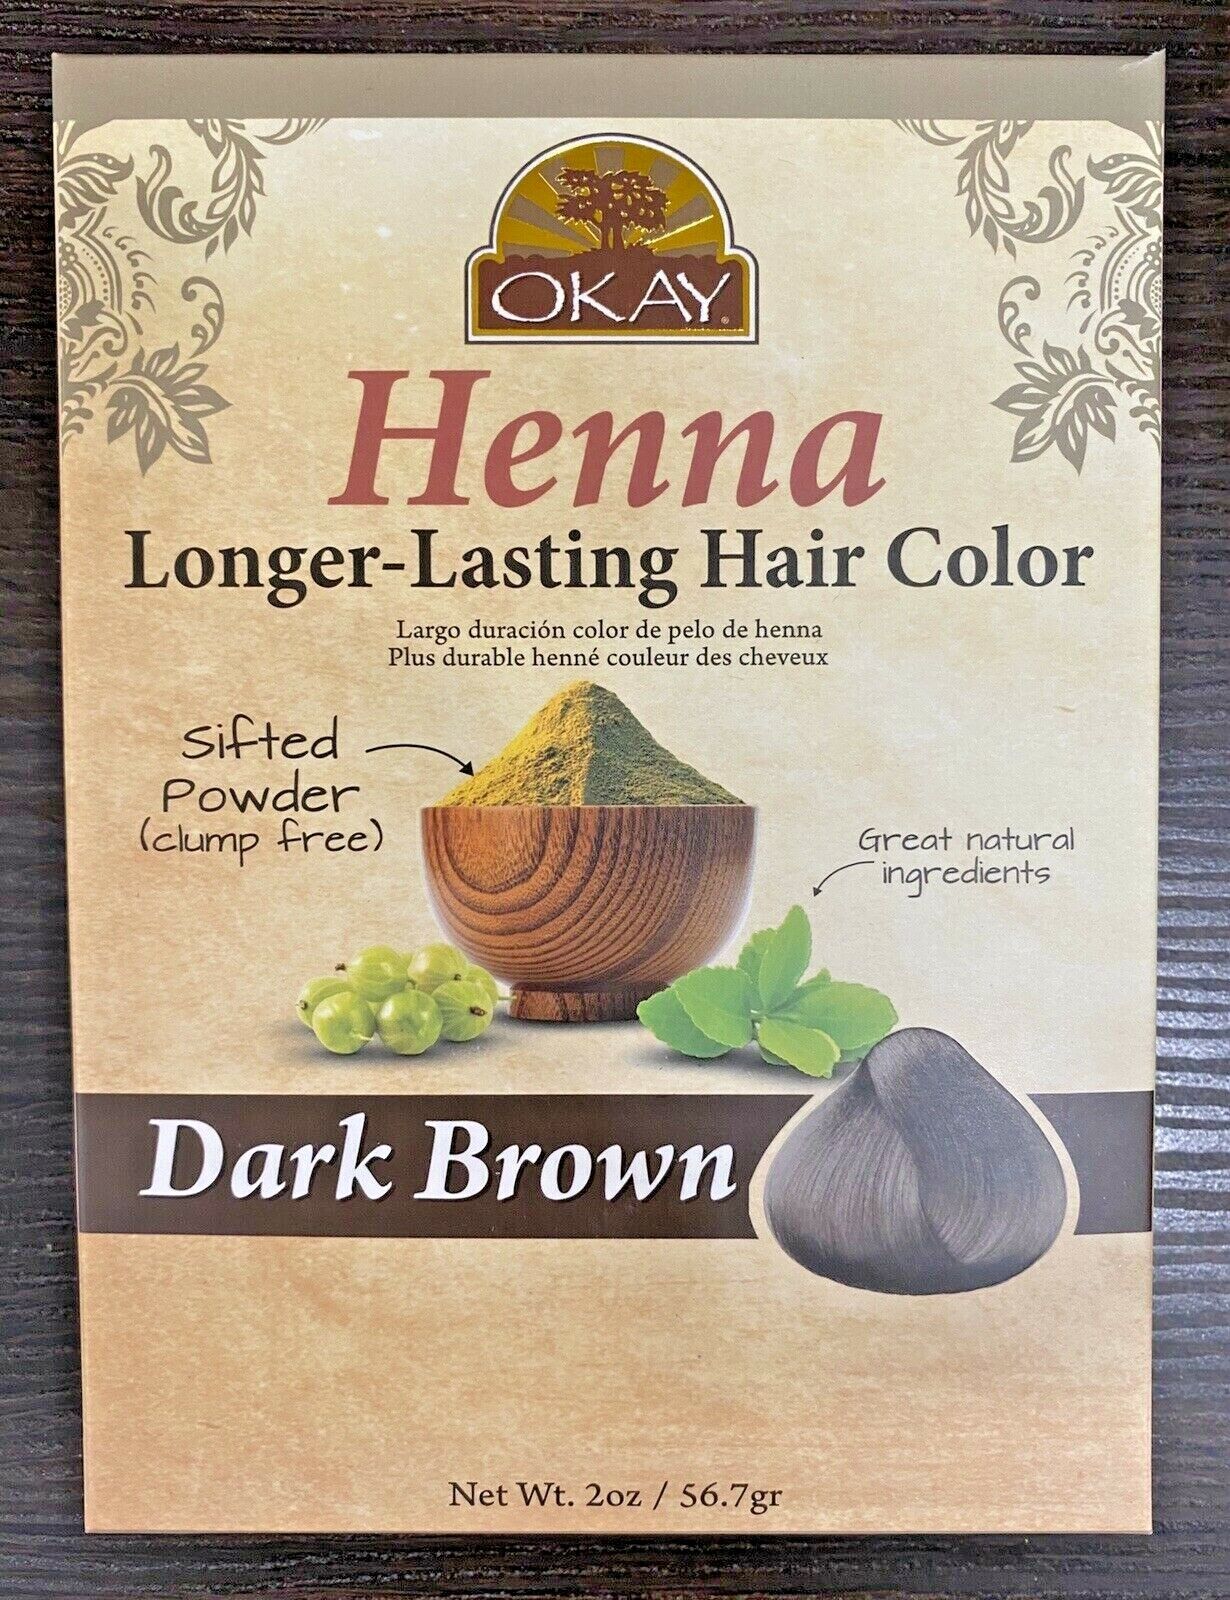 OKAY Henna Dark Brown Longer -Lasting Hair Color 2oz /  FREE SHIPPING  815166020669 | eBay